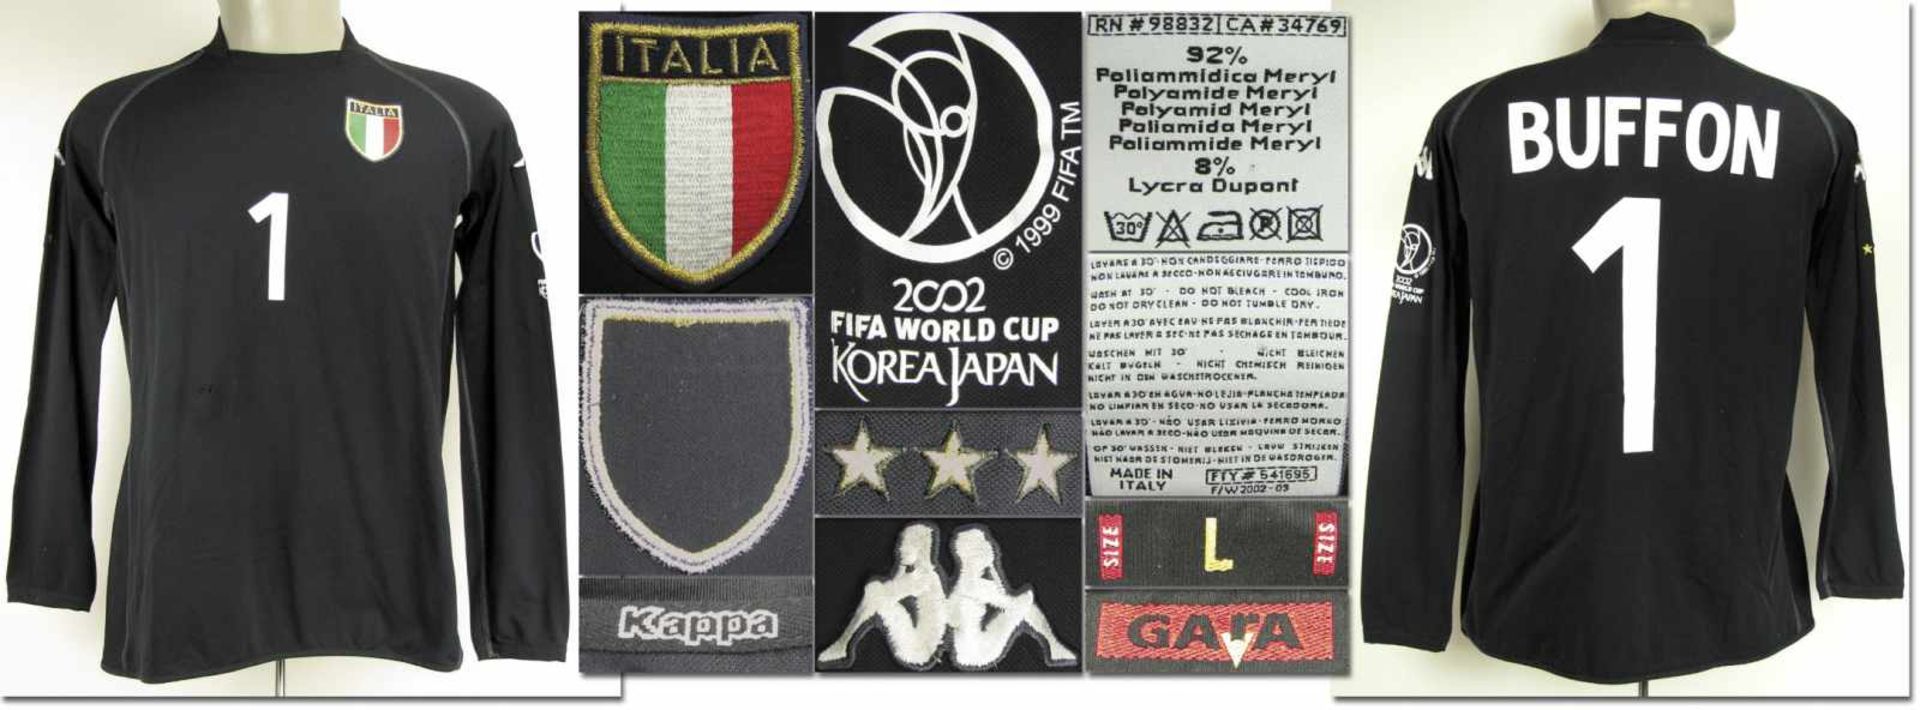 World Cup 2002 match worn football shirt Italia - Original match worn shirt Italy with number 1.